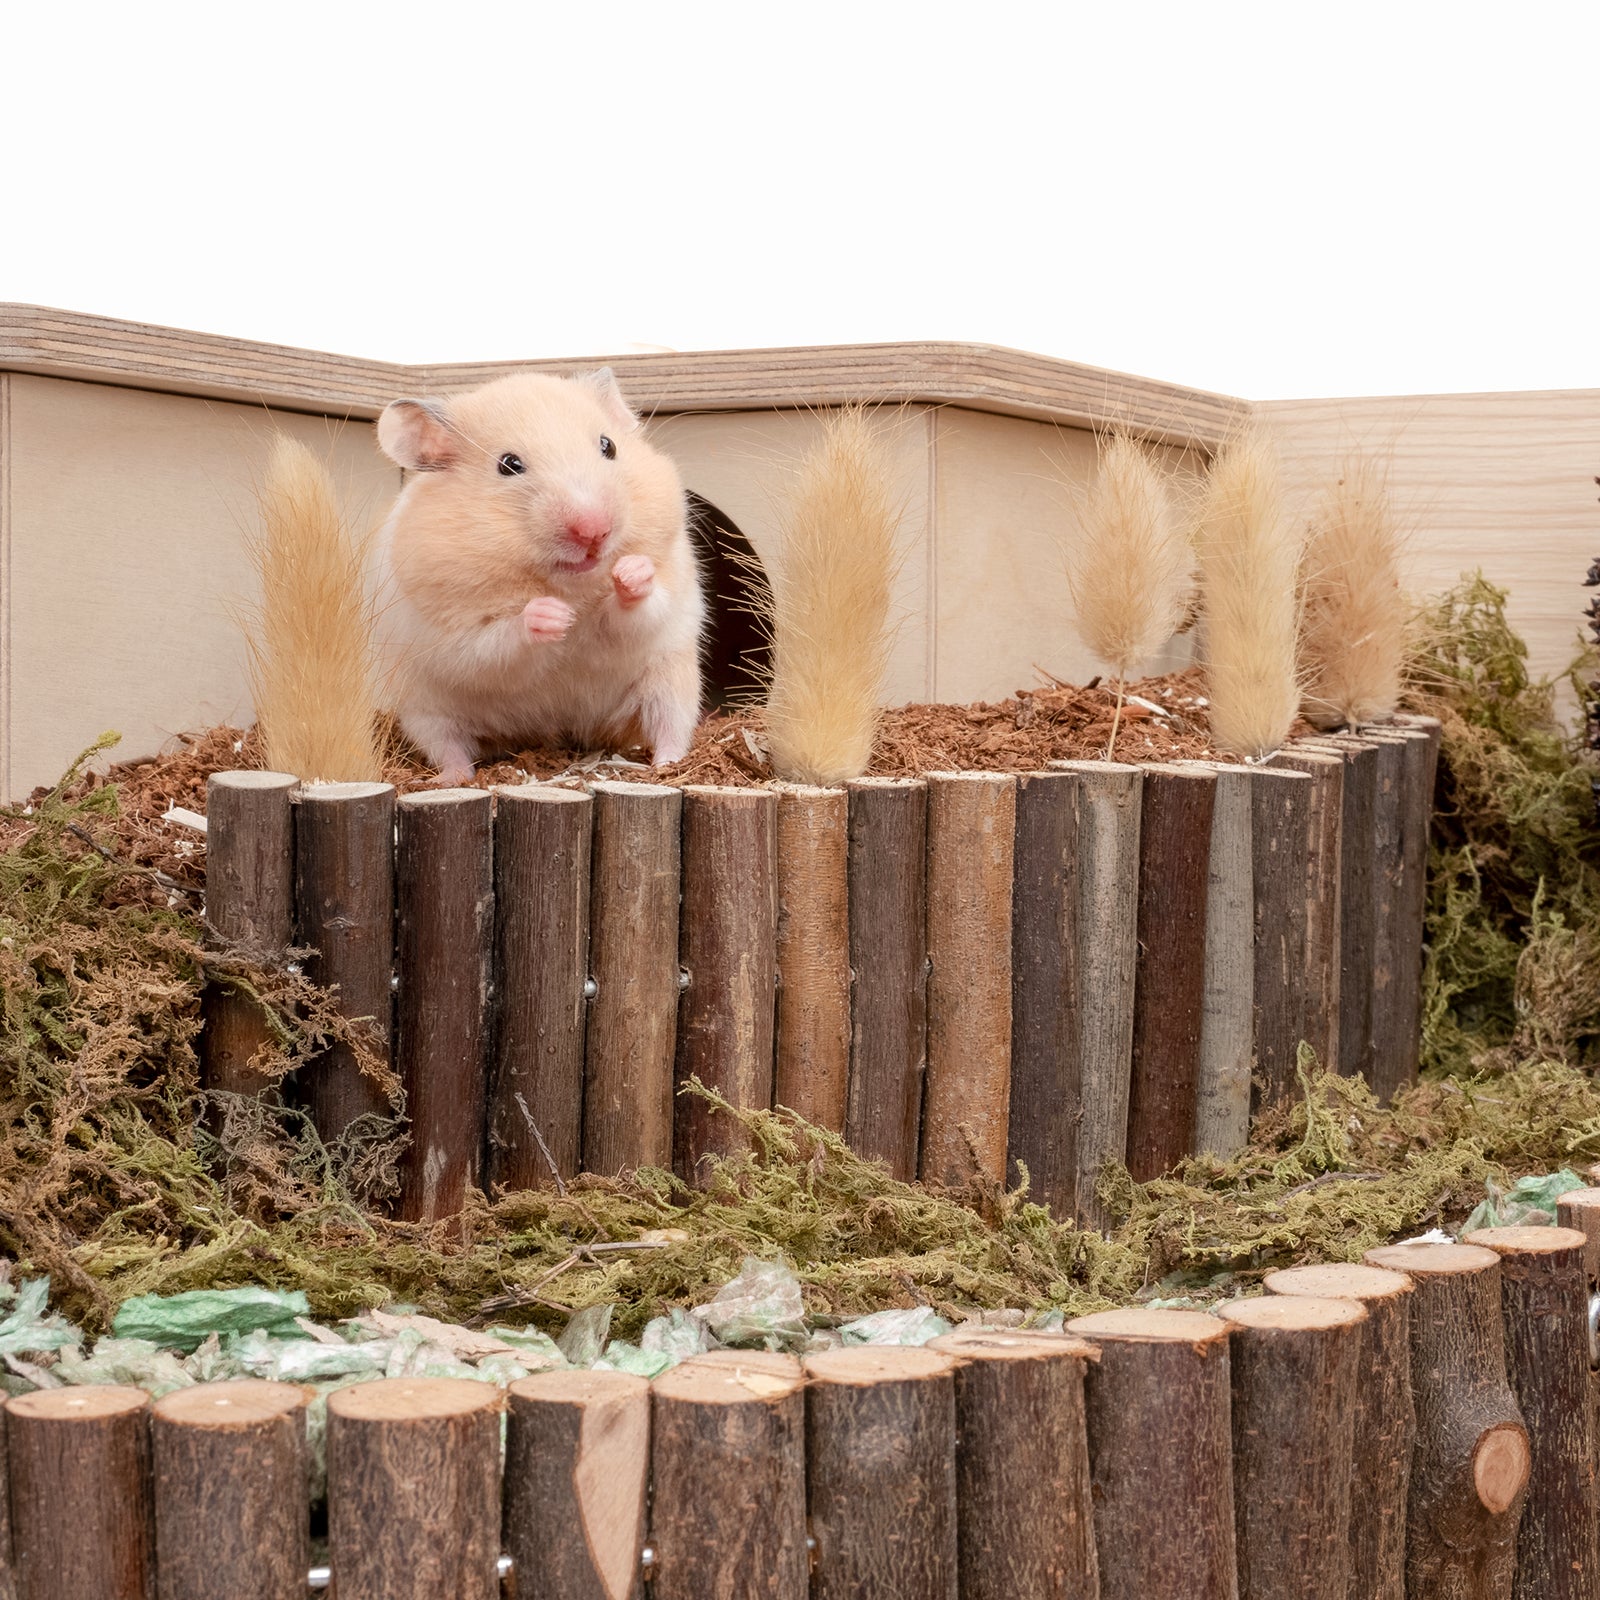 Niteangel Wooden Ladder Bridge, Hamster Mouse Rat Rodents Toy, Small Animal Chew Toy - Niteangel Pet CA